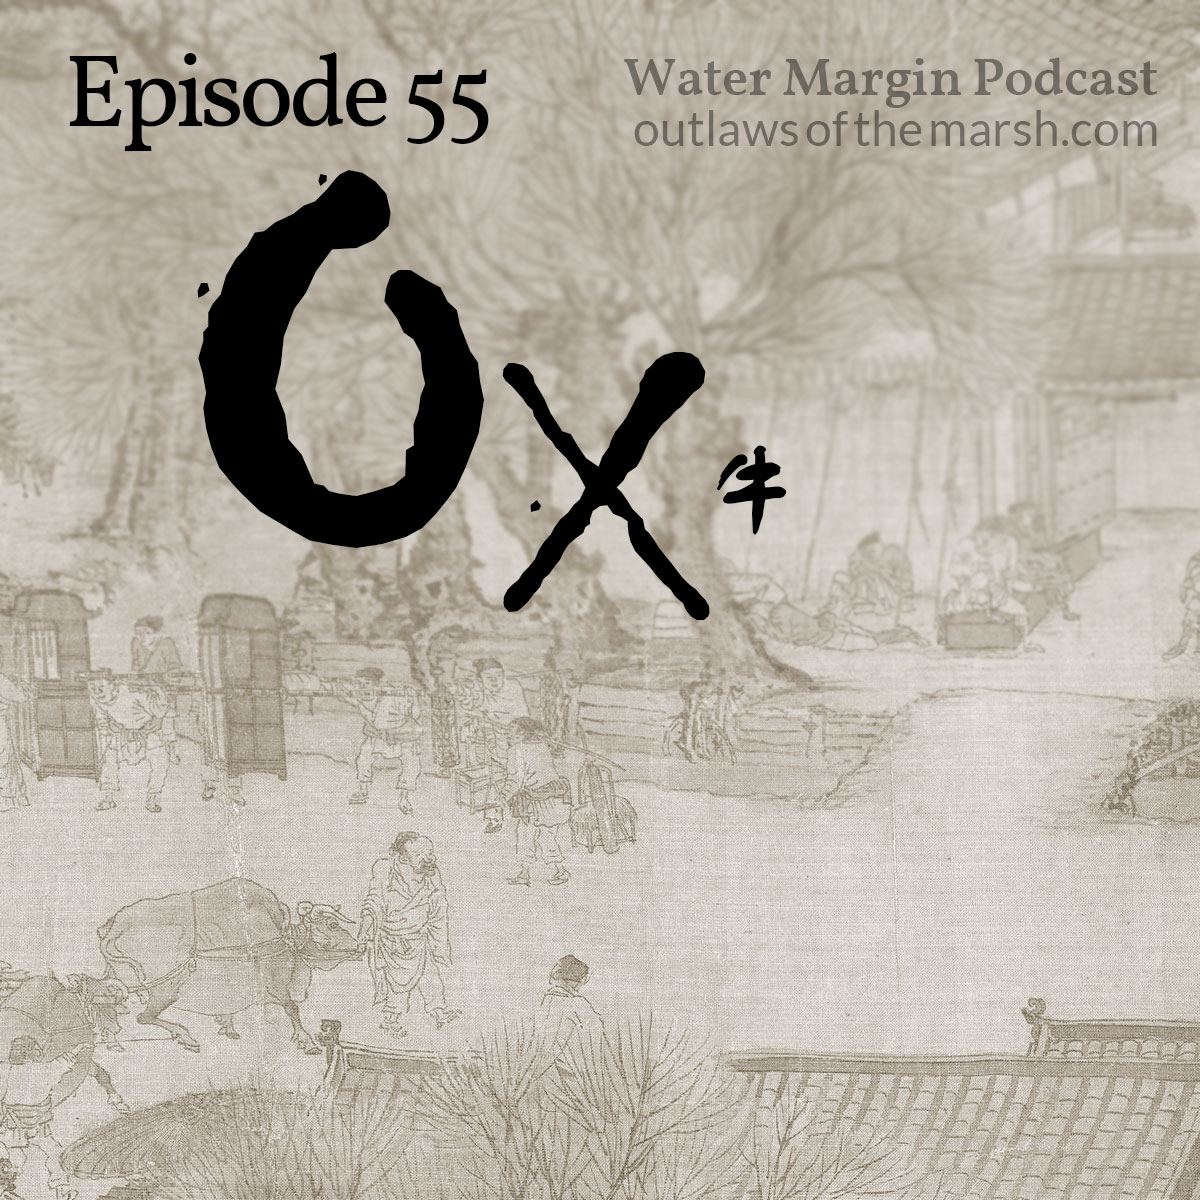 Water Margin Podcast: Episode 055